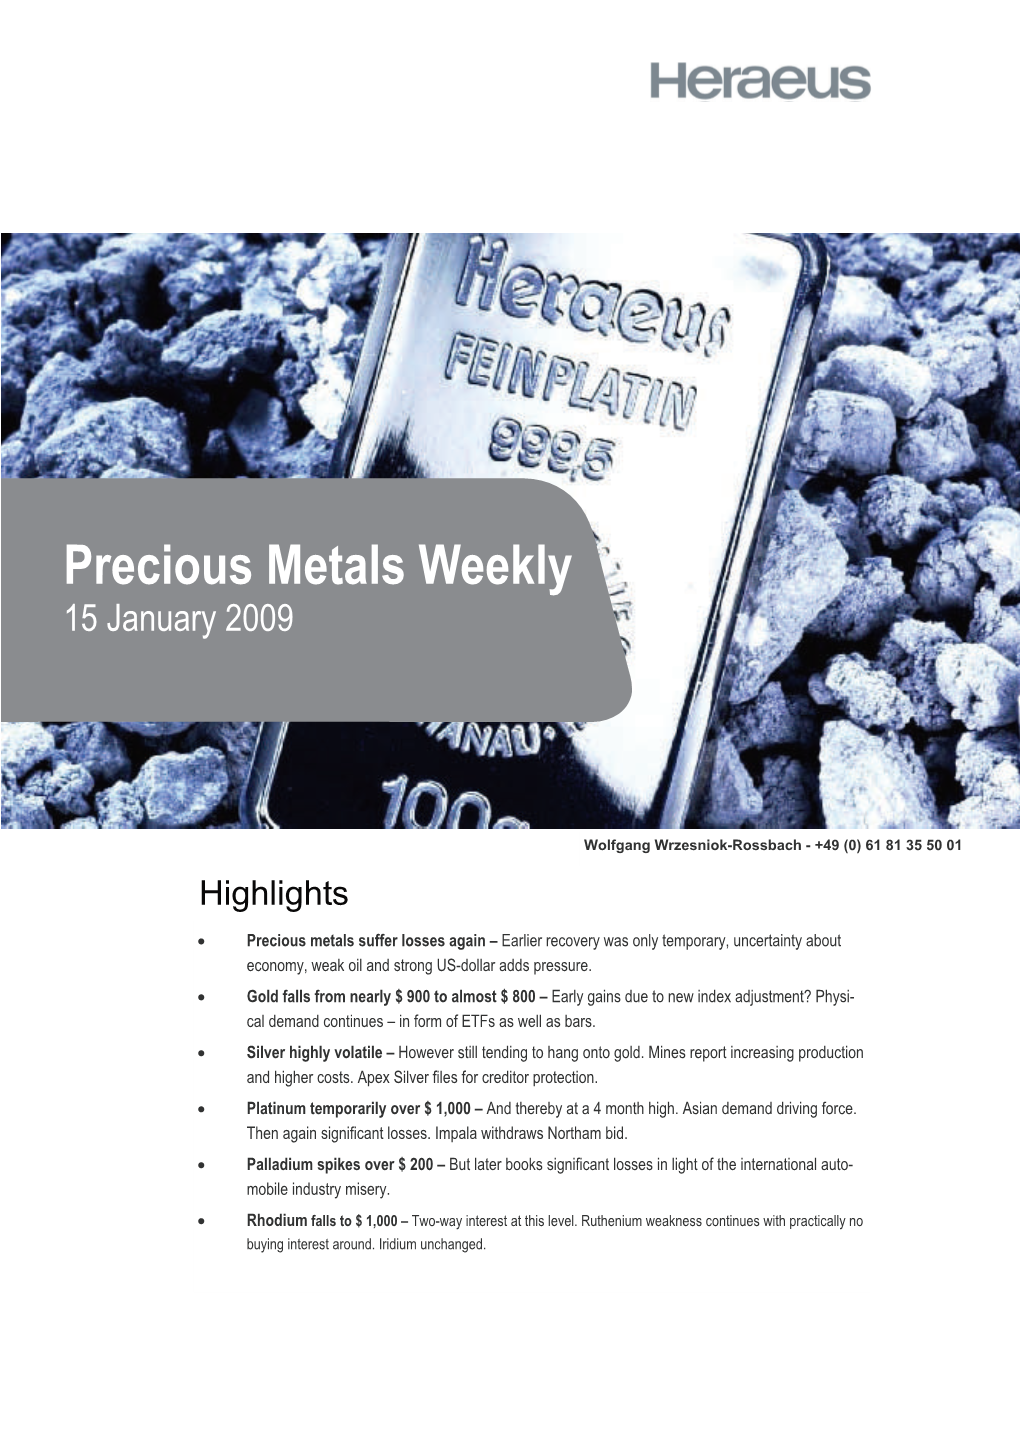 Precious Metal Weekly – 15 January 2009